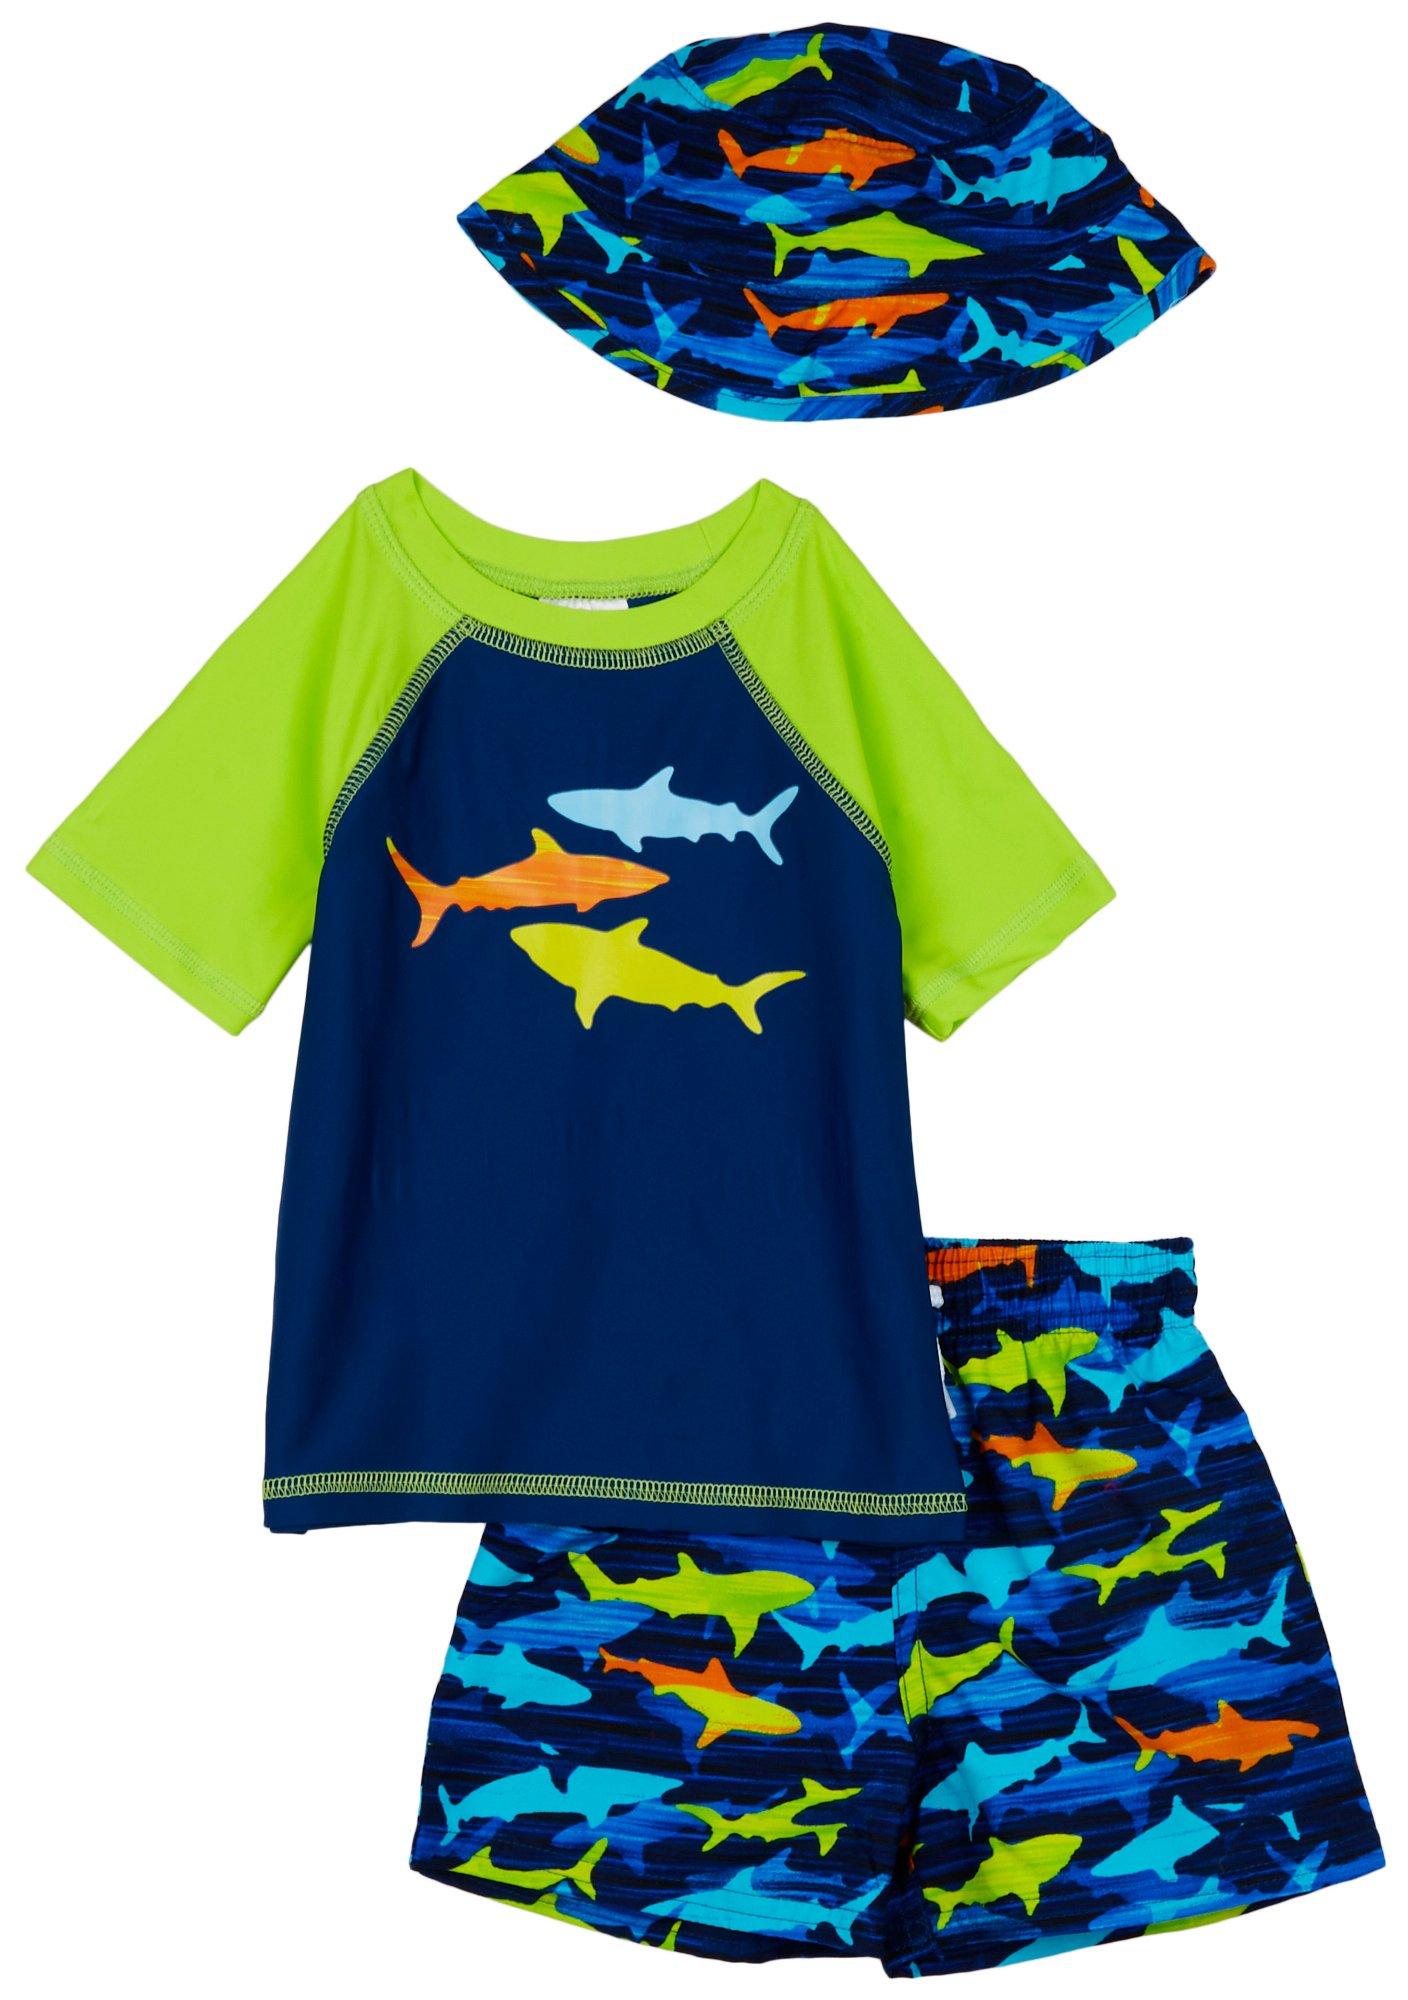 Baby Boys 3-pc Stripe Shark Swimsuit Set